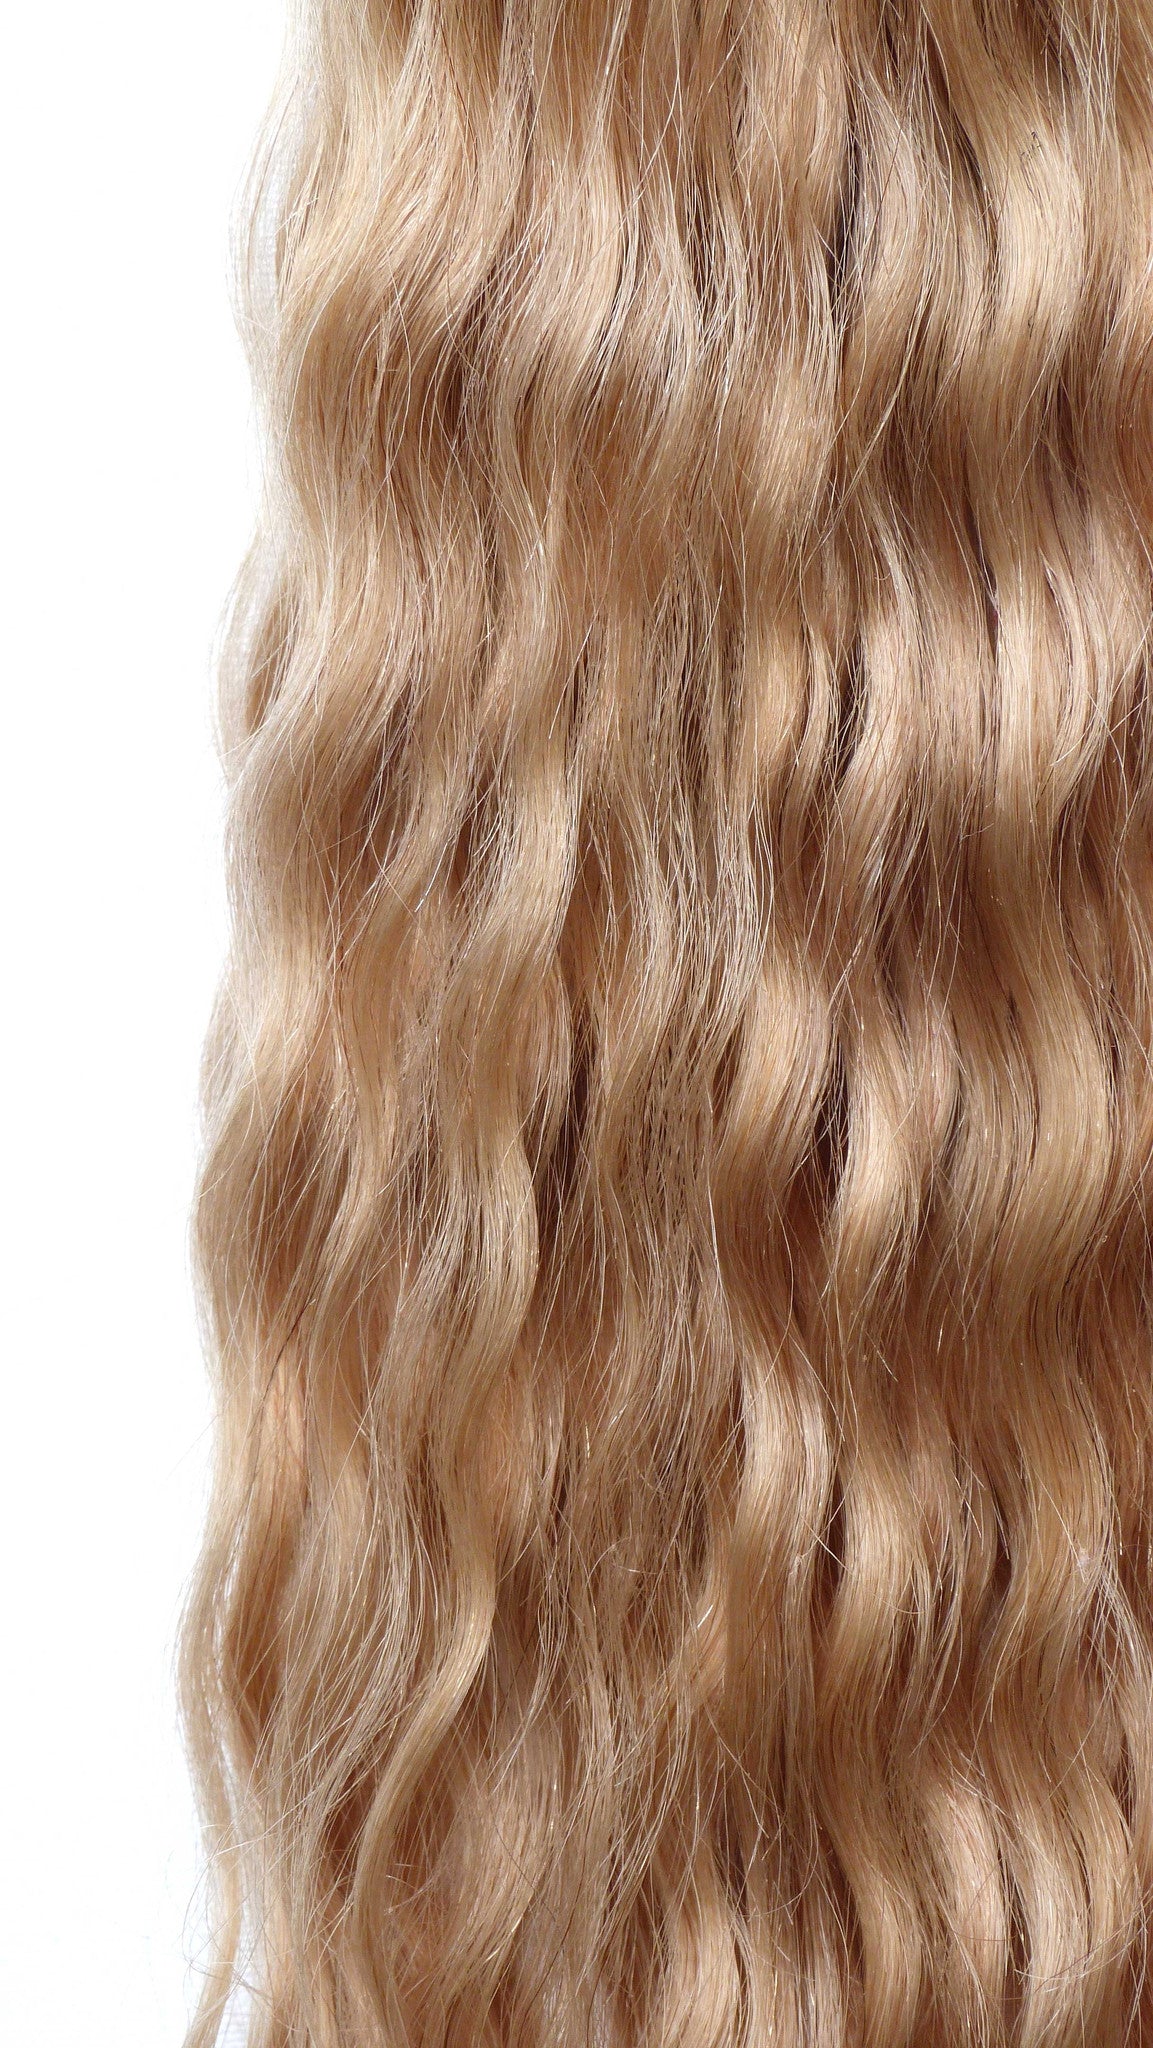 Brazilian Virgin Human Hair Extensions - Micro Loop Extensions-Virgin Hair & Beauty, The Best Hair Extensions, Real Virgin Human Hair.